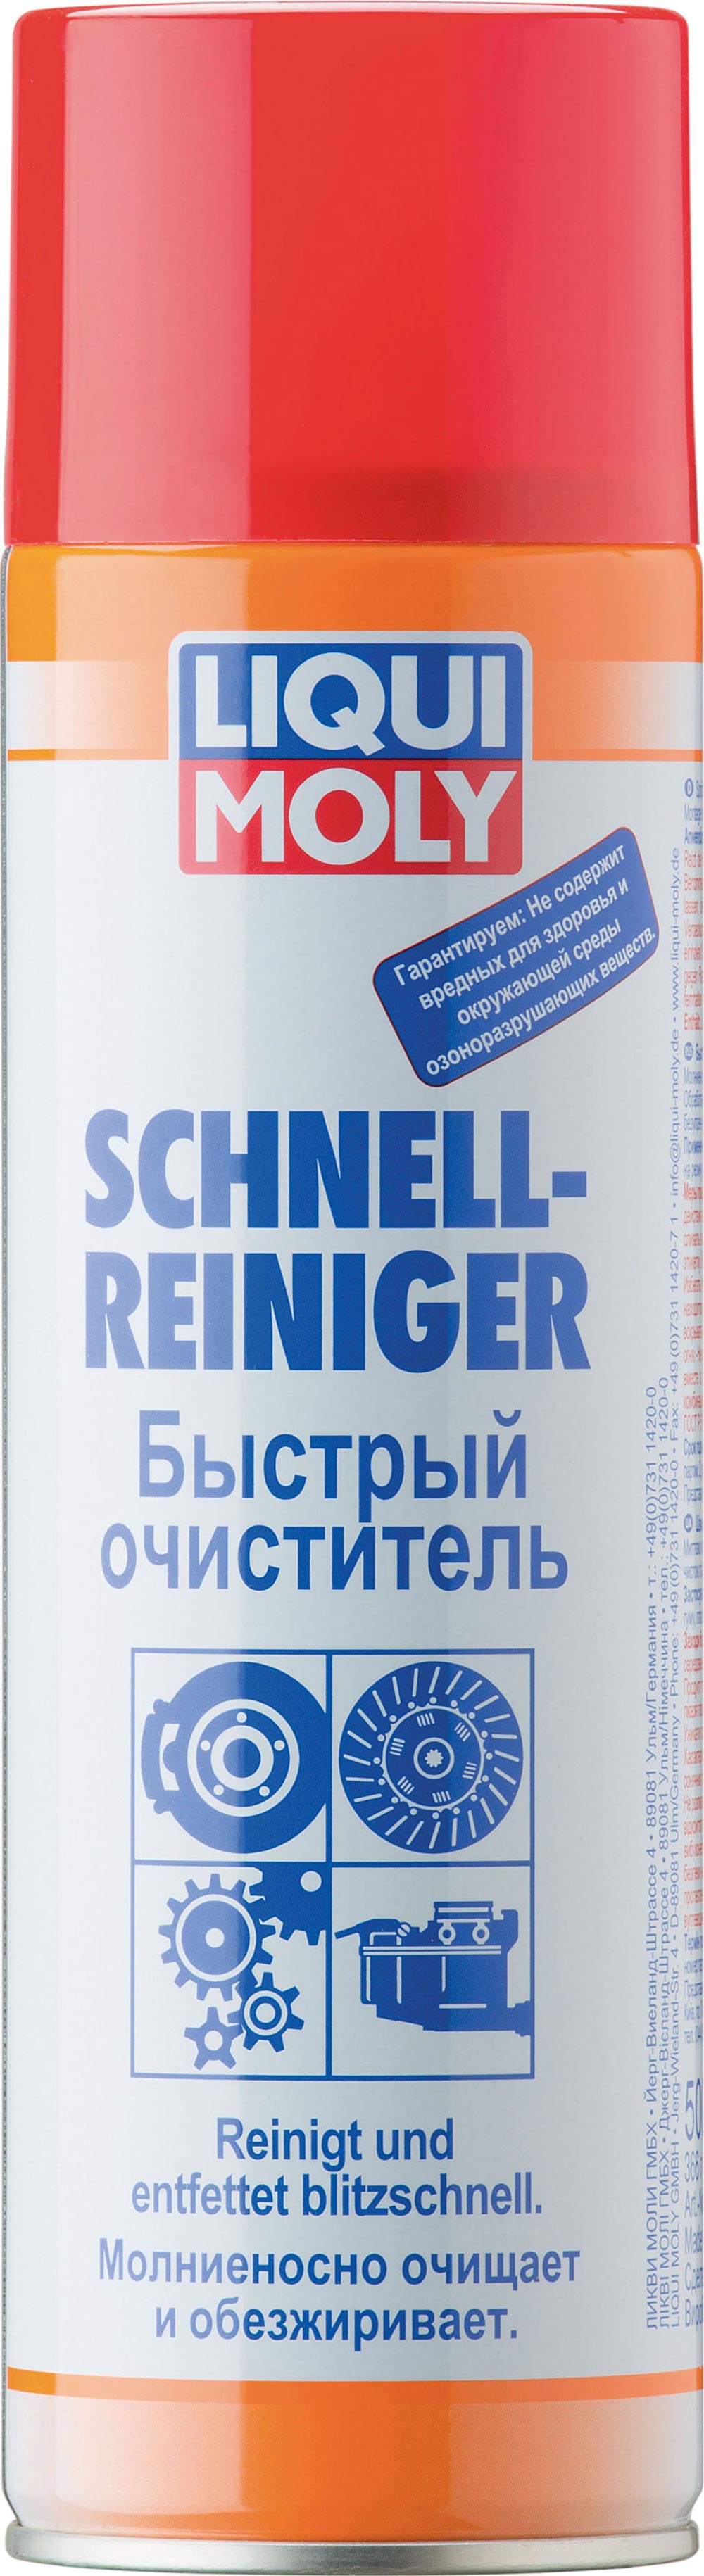 Быстрый очиститель Schnell-Reiniger (500 мл)